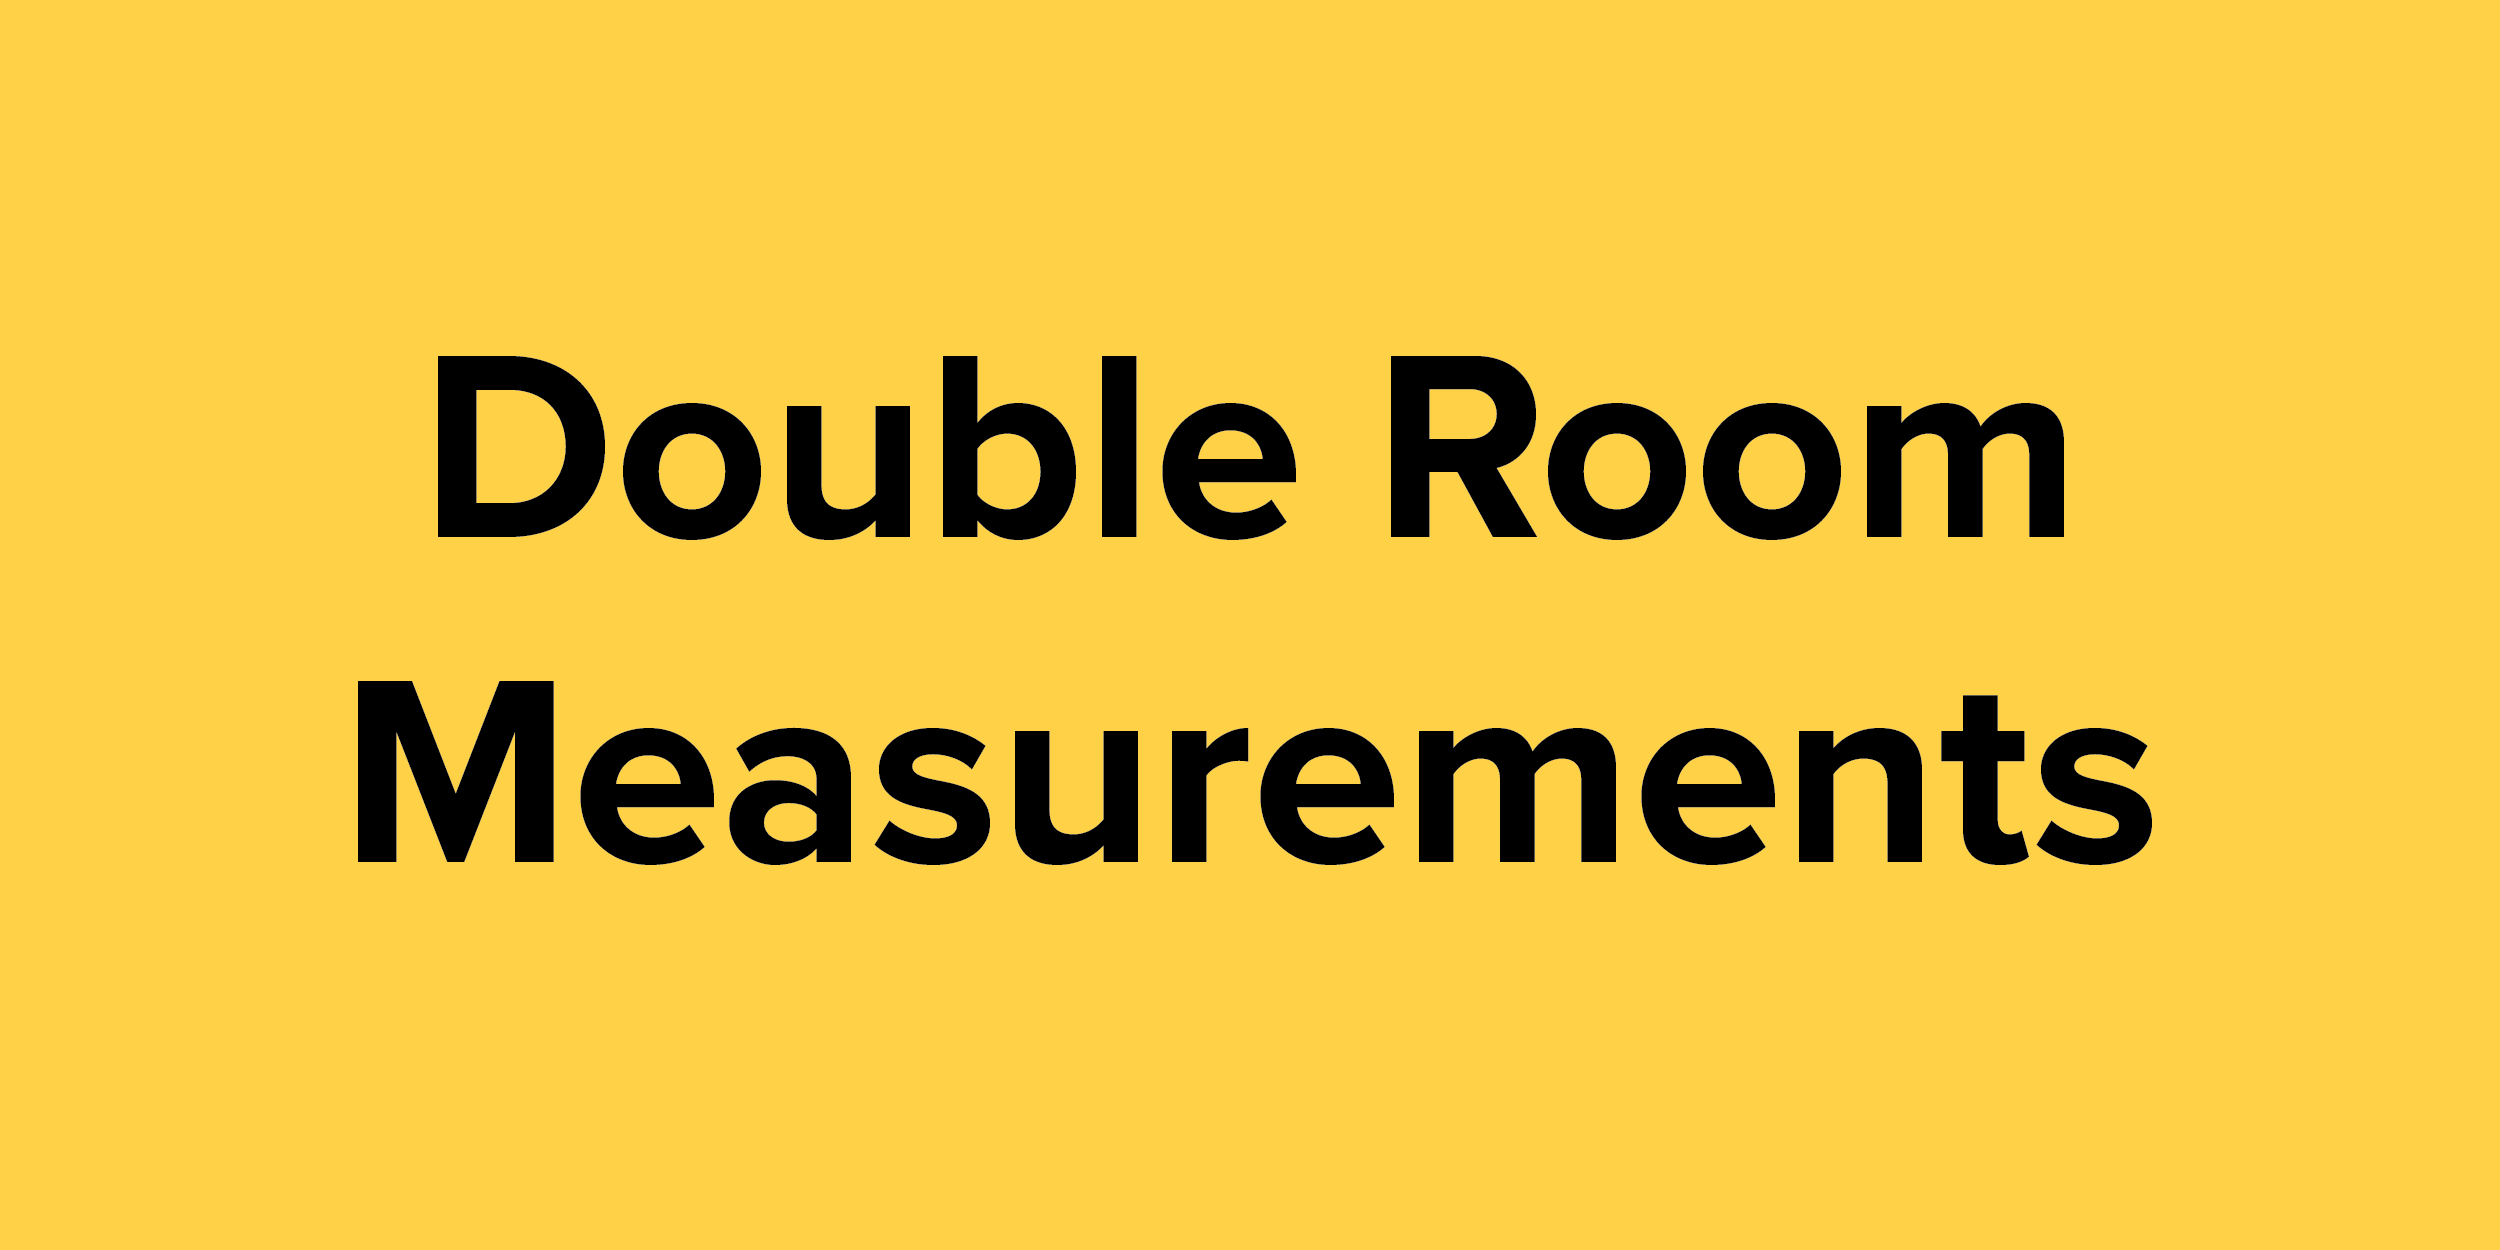 Double Room Measurements